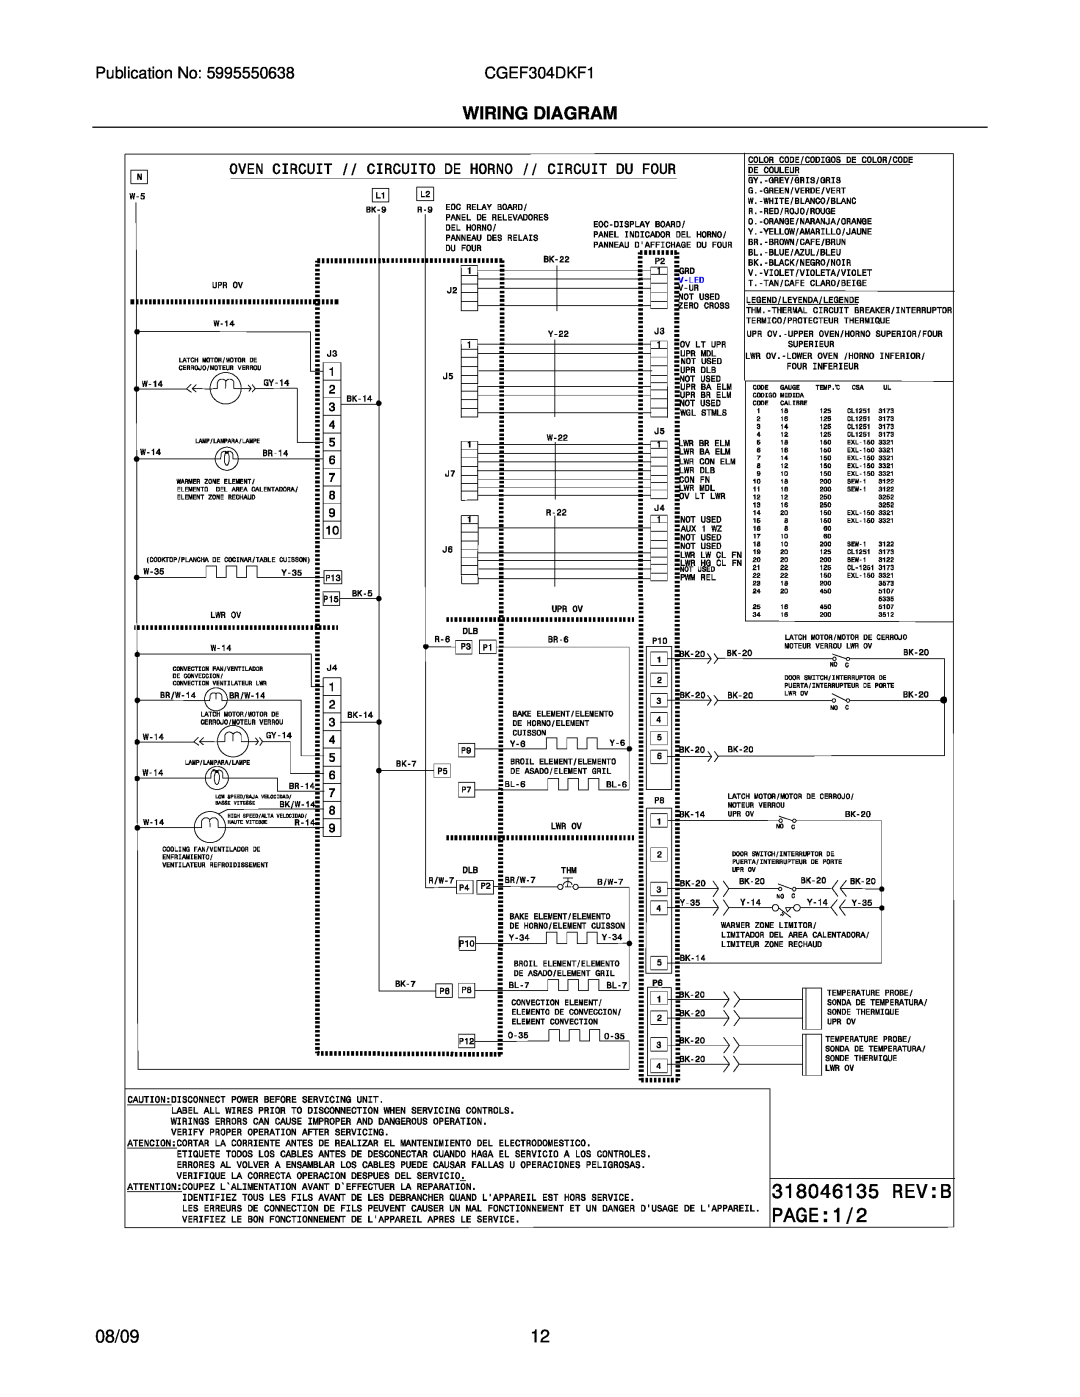 Electrolux CGEF304DK installation instructions Wiring Diagram, 08/09 